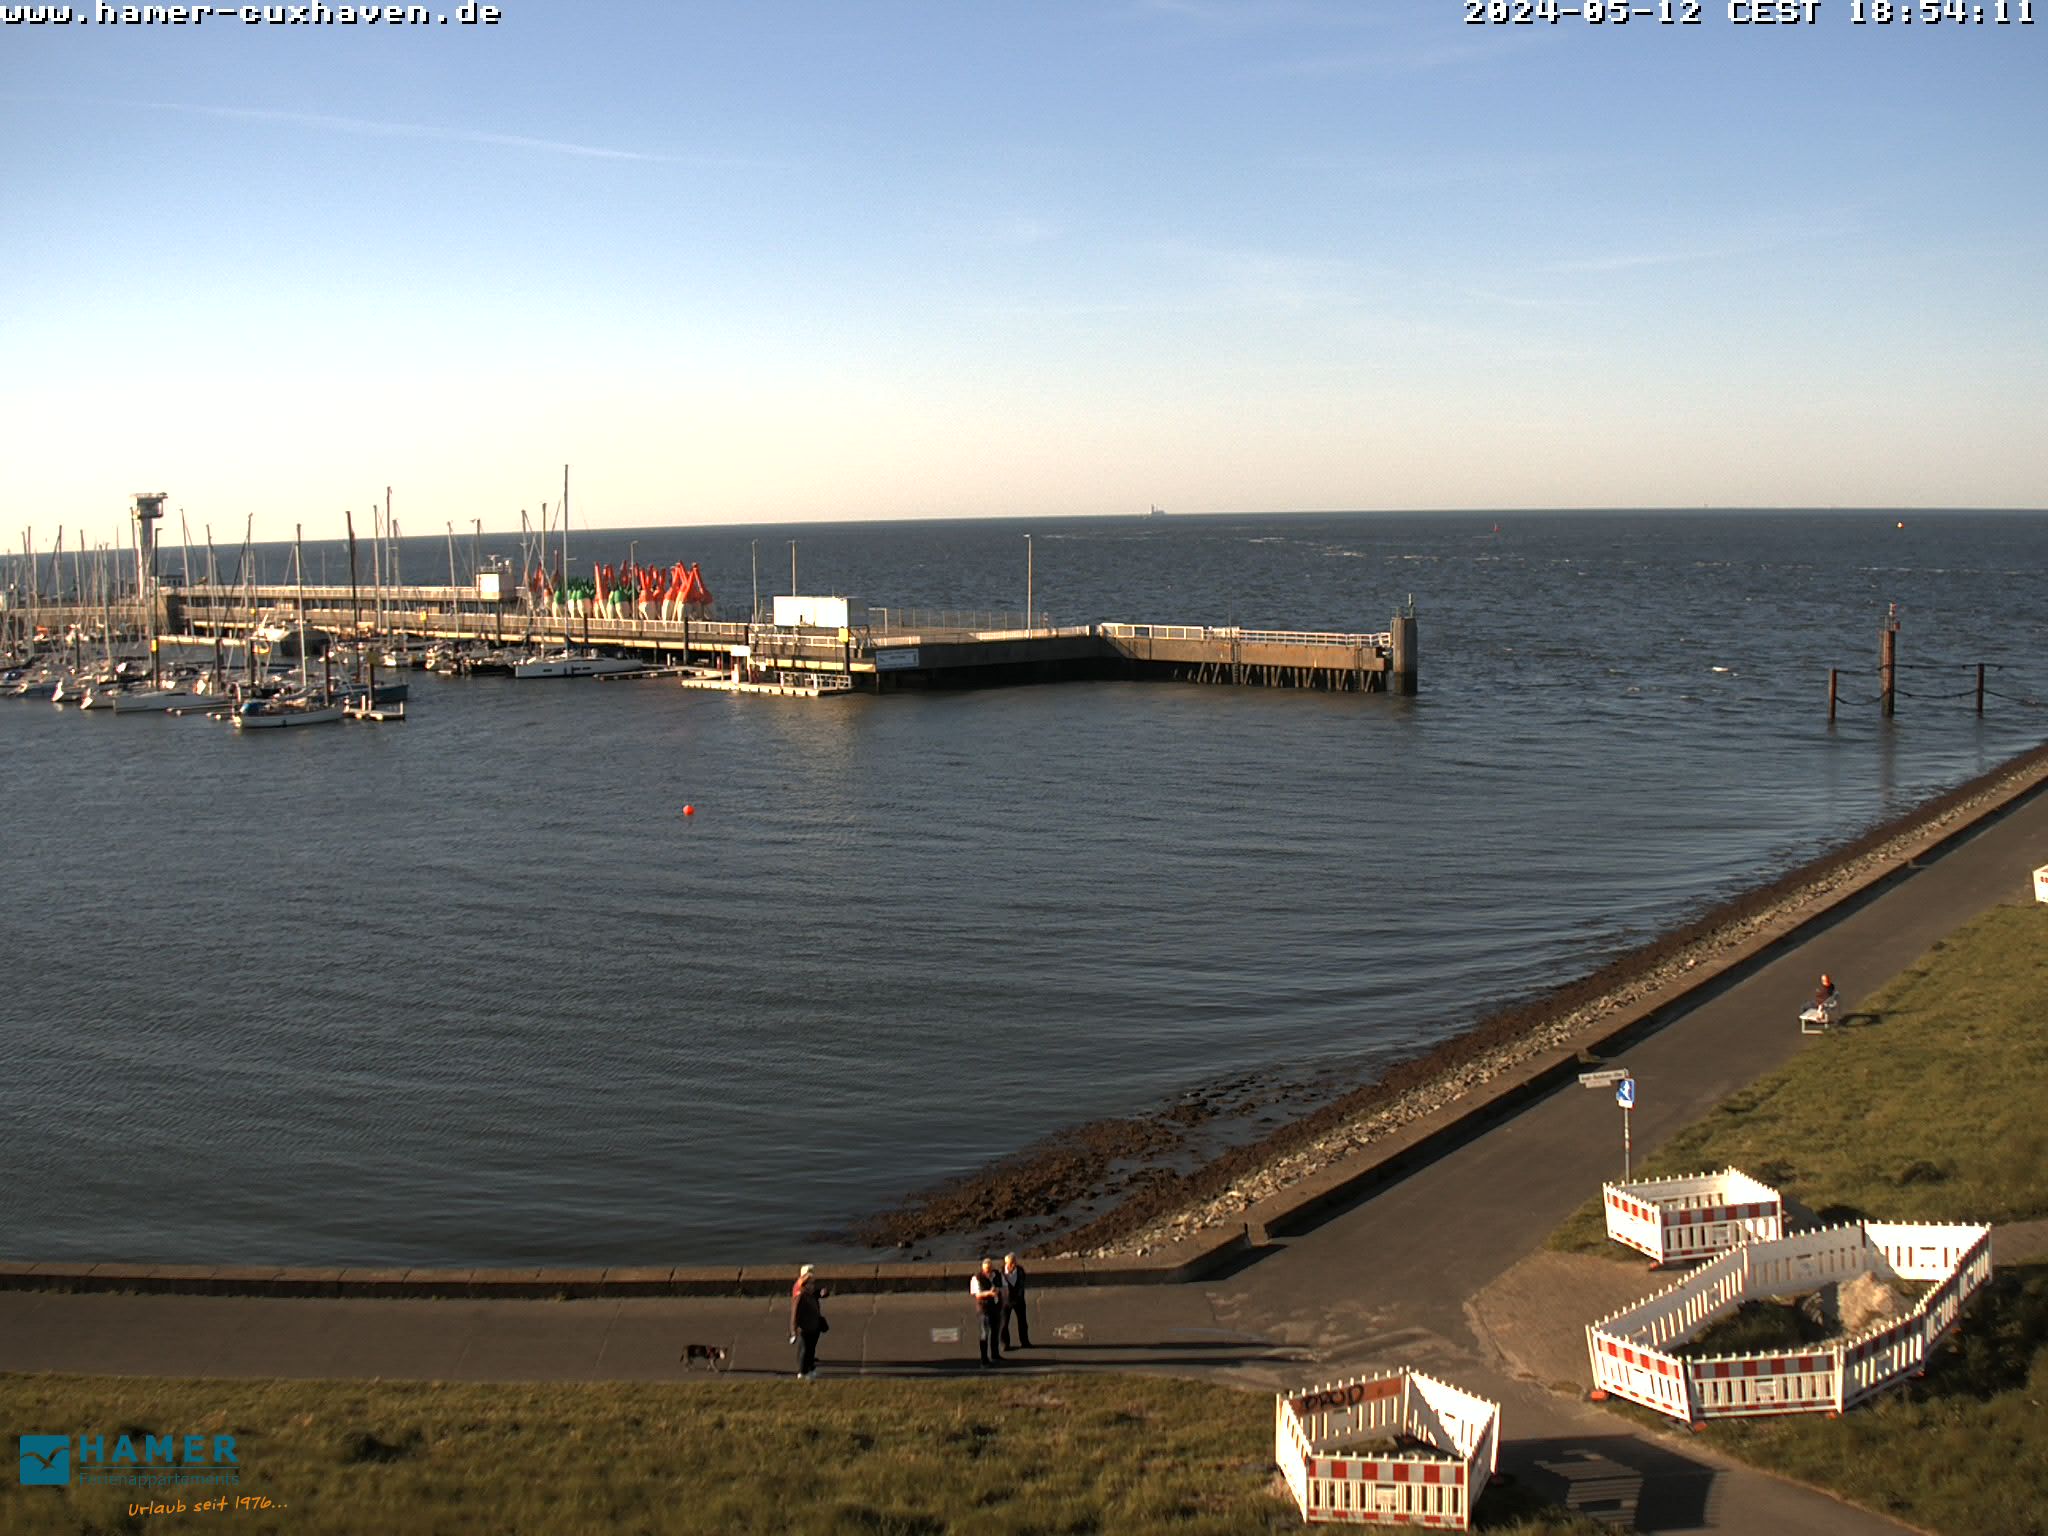 Cuxhaven Mer. 18:55